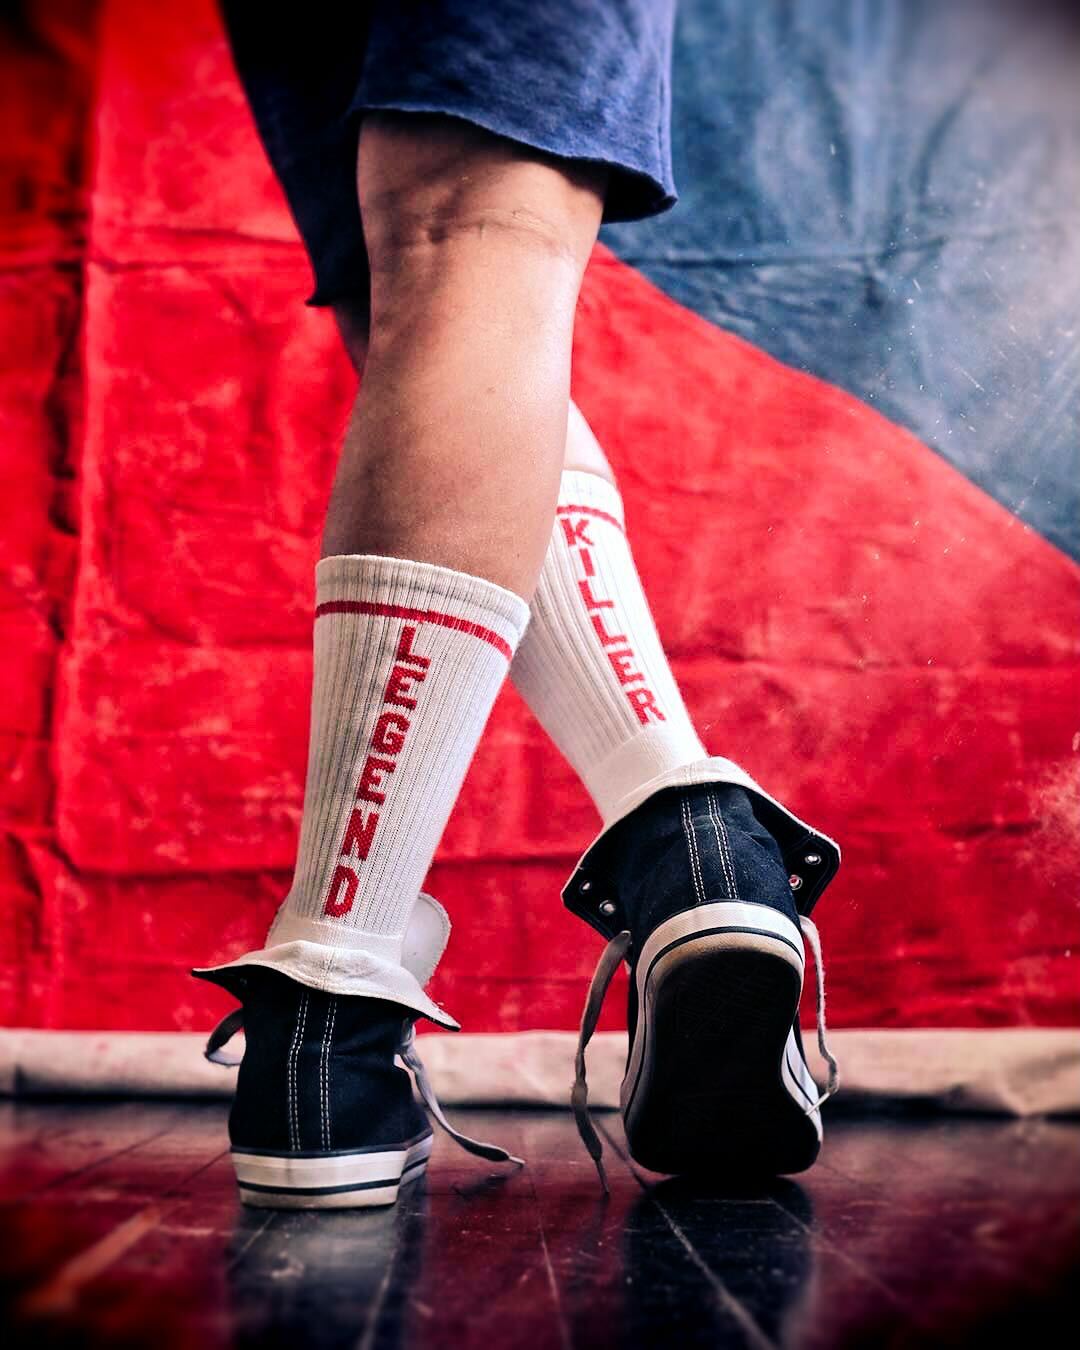 Rowdy Roddy Piper Legend Killer Socks - Roots of Fight